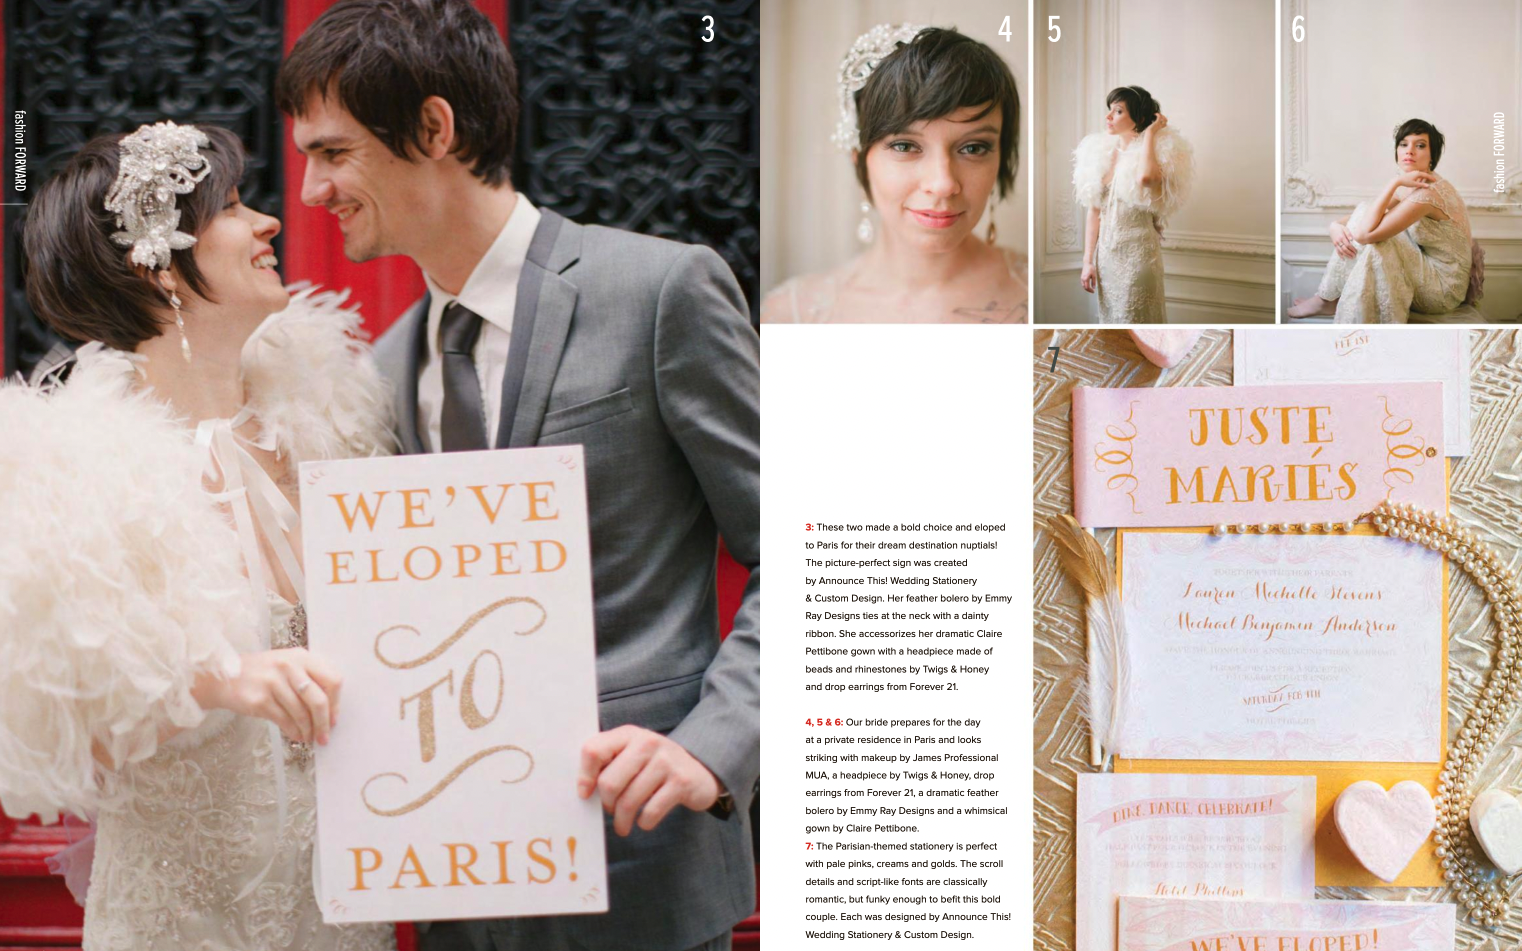 Paris inspired wedding fashion